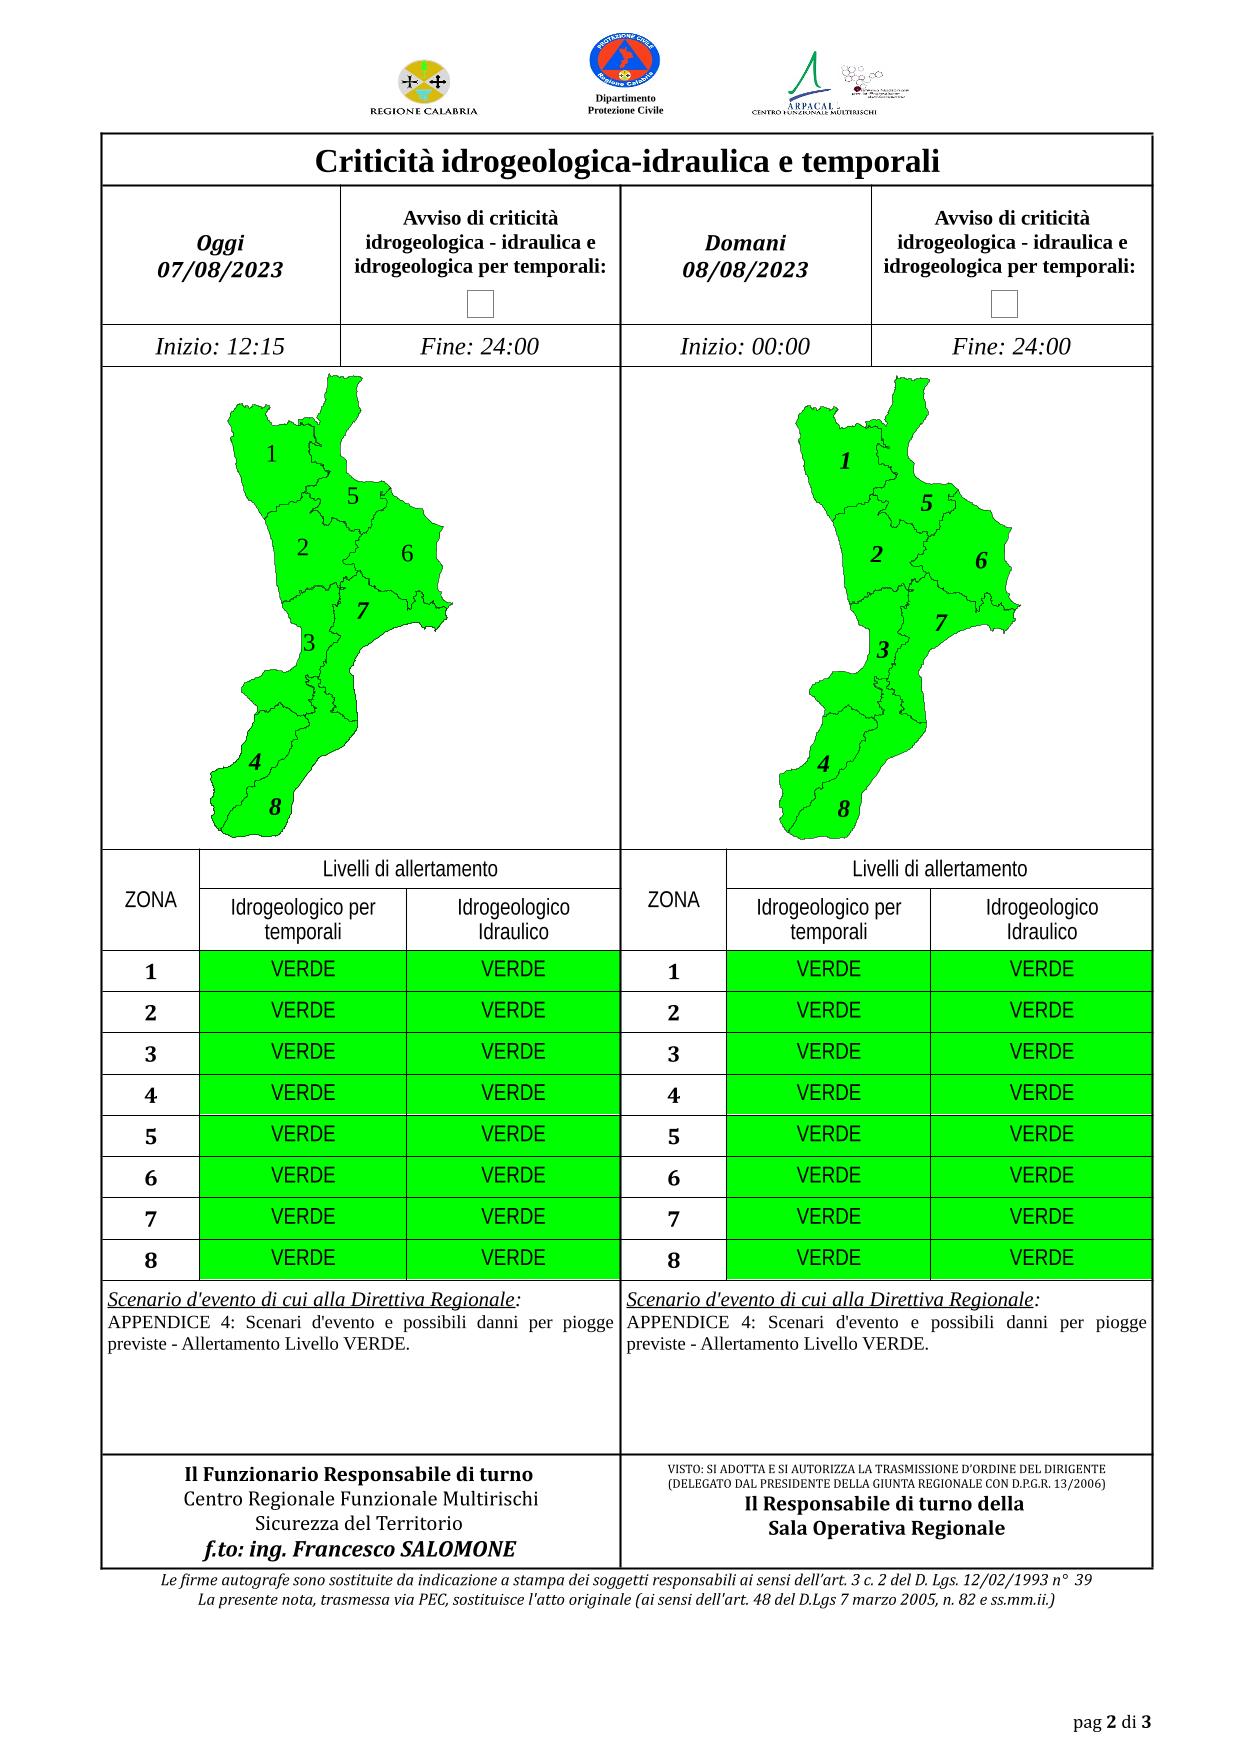 Criticità idrogeologica-idraulica e temporali in Calabria 07-08-2023